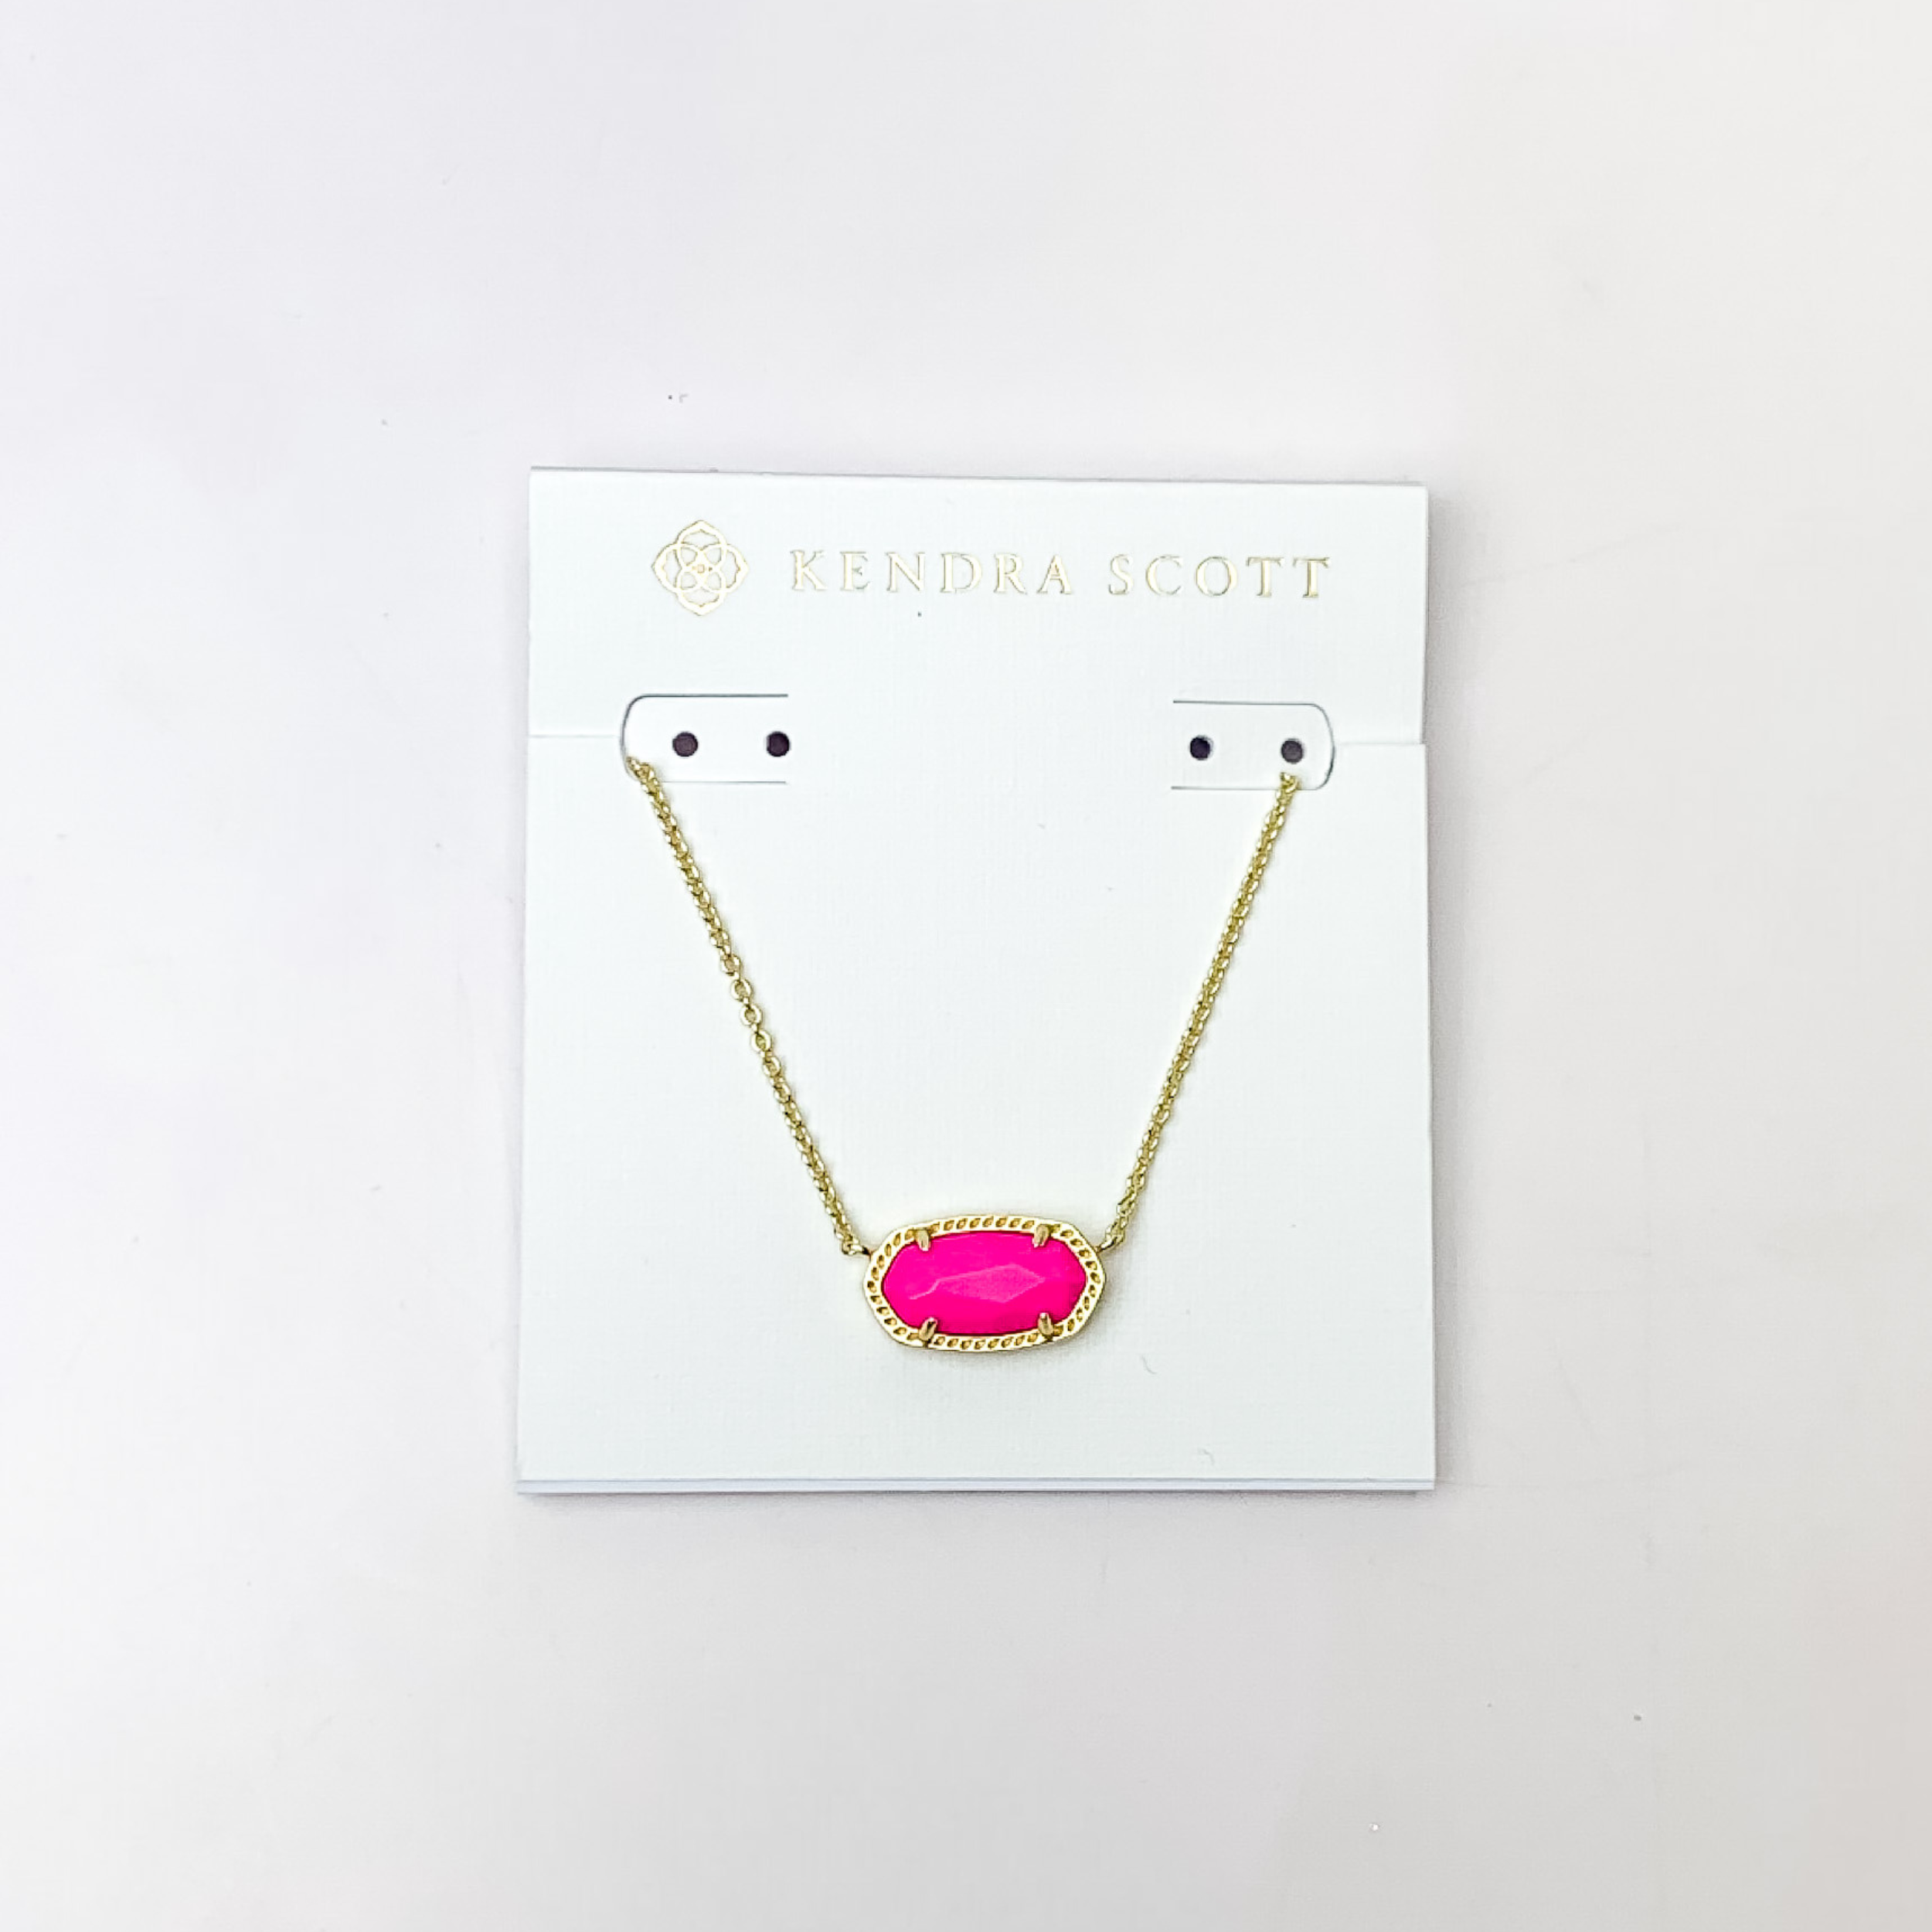 Kendra Scott | Elisa Gold Pendant Necklace in Magenta - Giddy Up Glamour Boutique